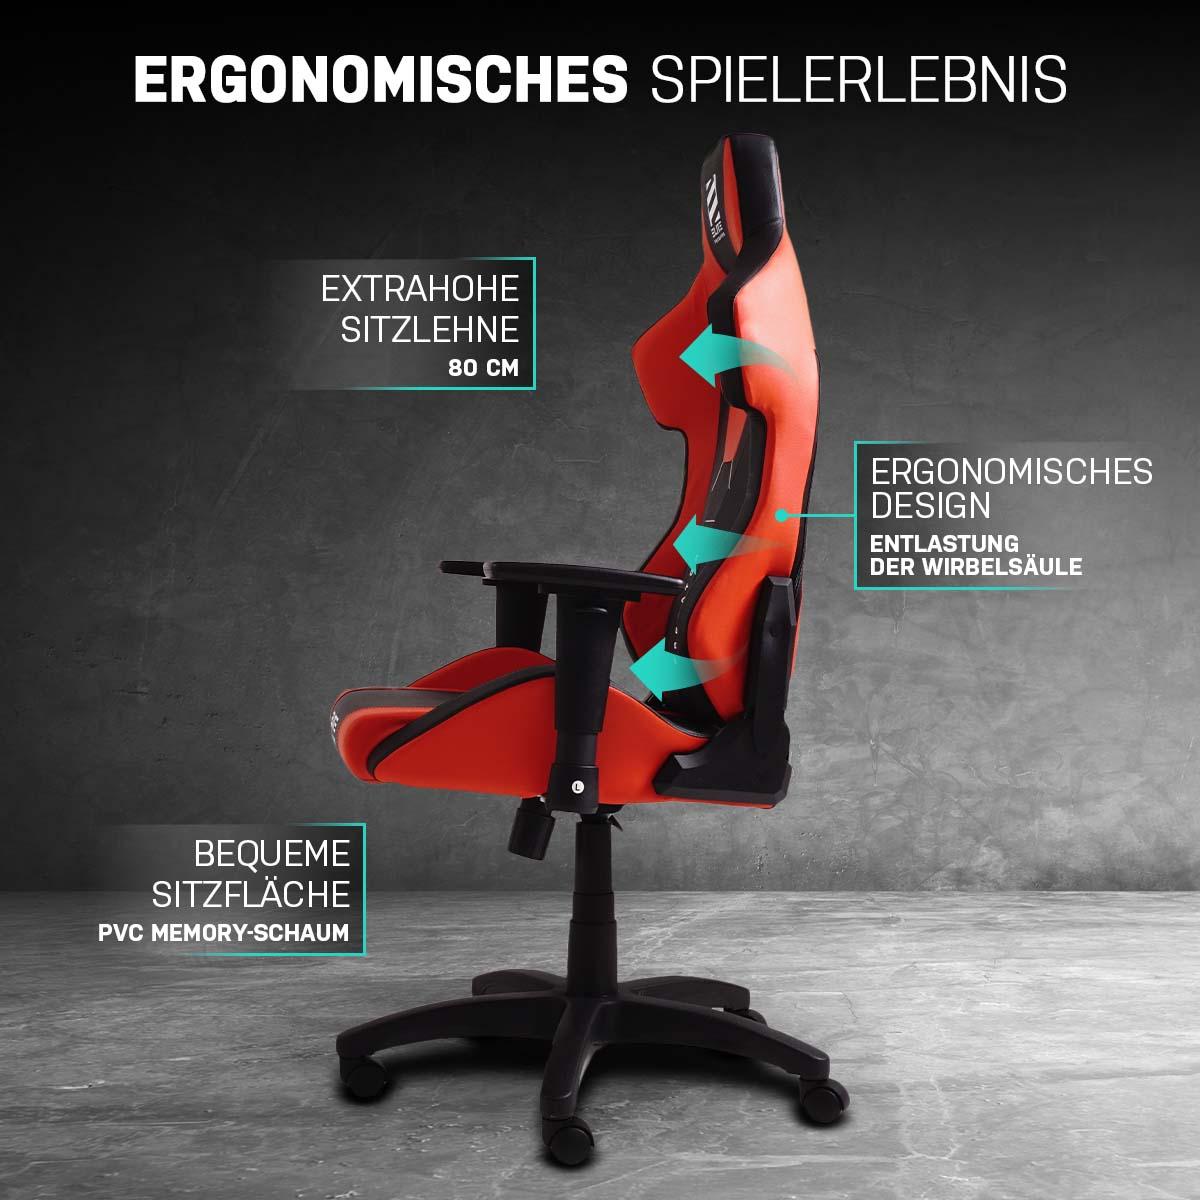 ELITE PREDATOR Rot/Schwarz Gaming Stuhl